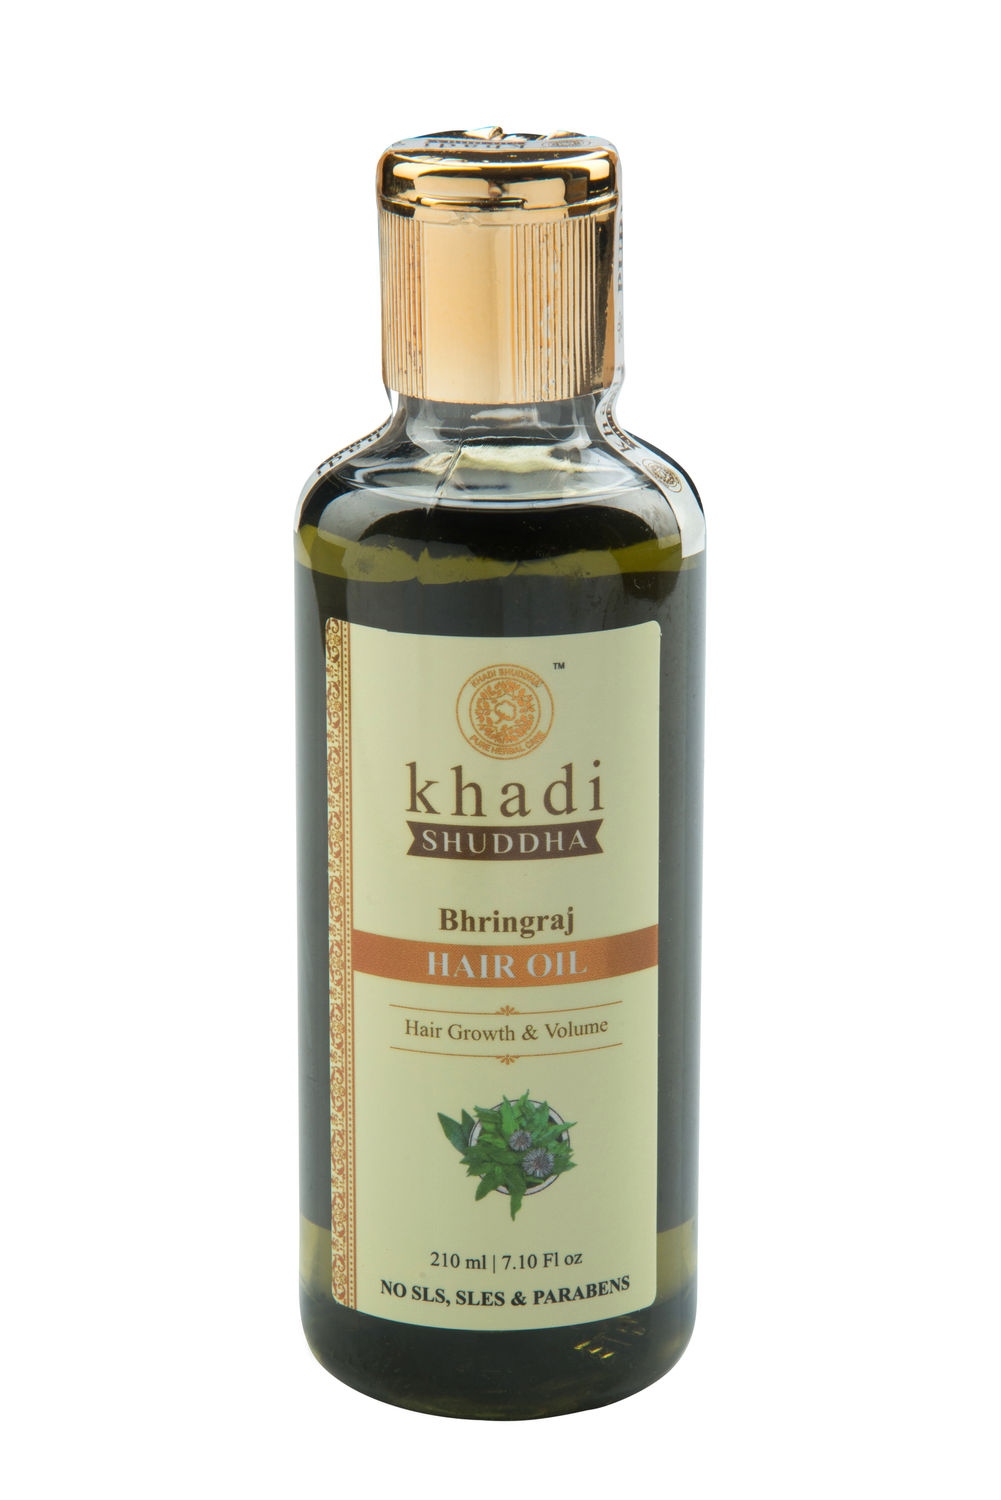 Khadi Natural Bhringraj Hair Oil for Controlling Hair Fall 210ml, Pack of 1  | eBay